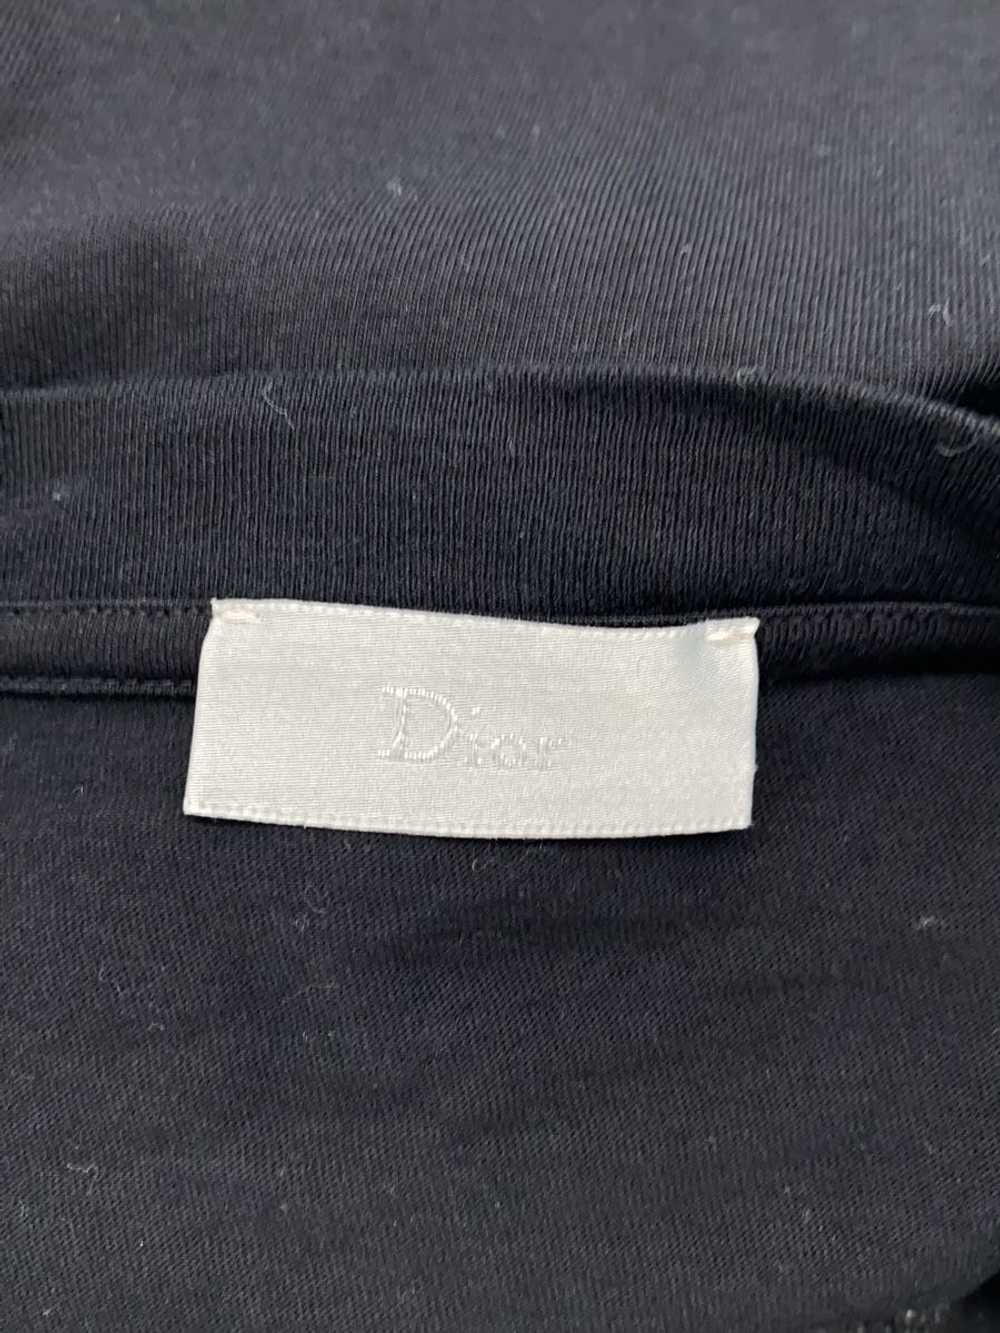 Dior Homme 18Aw Paris Bee T-Shirt XL Cotton Blk W… - image 3